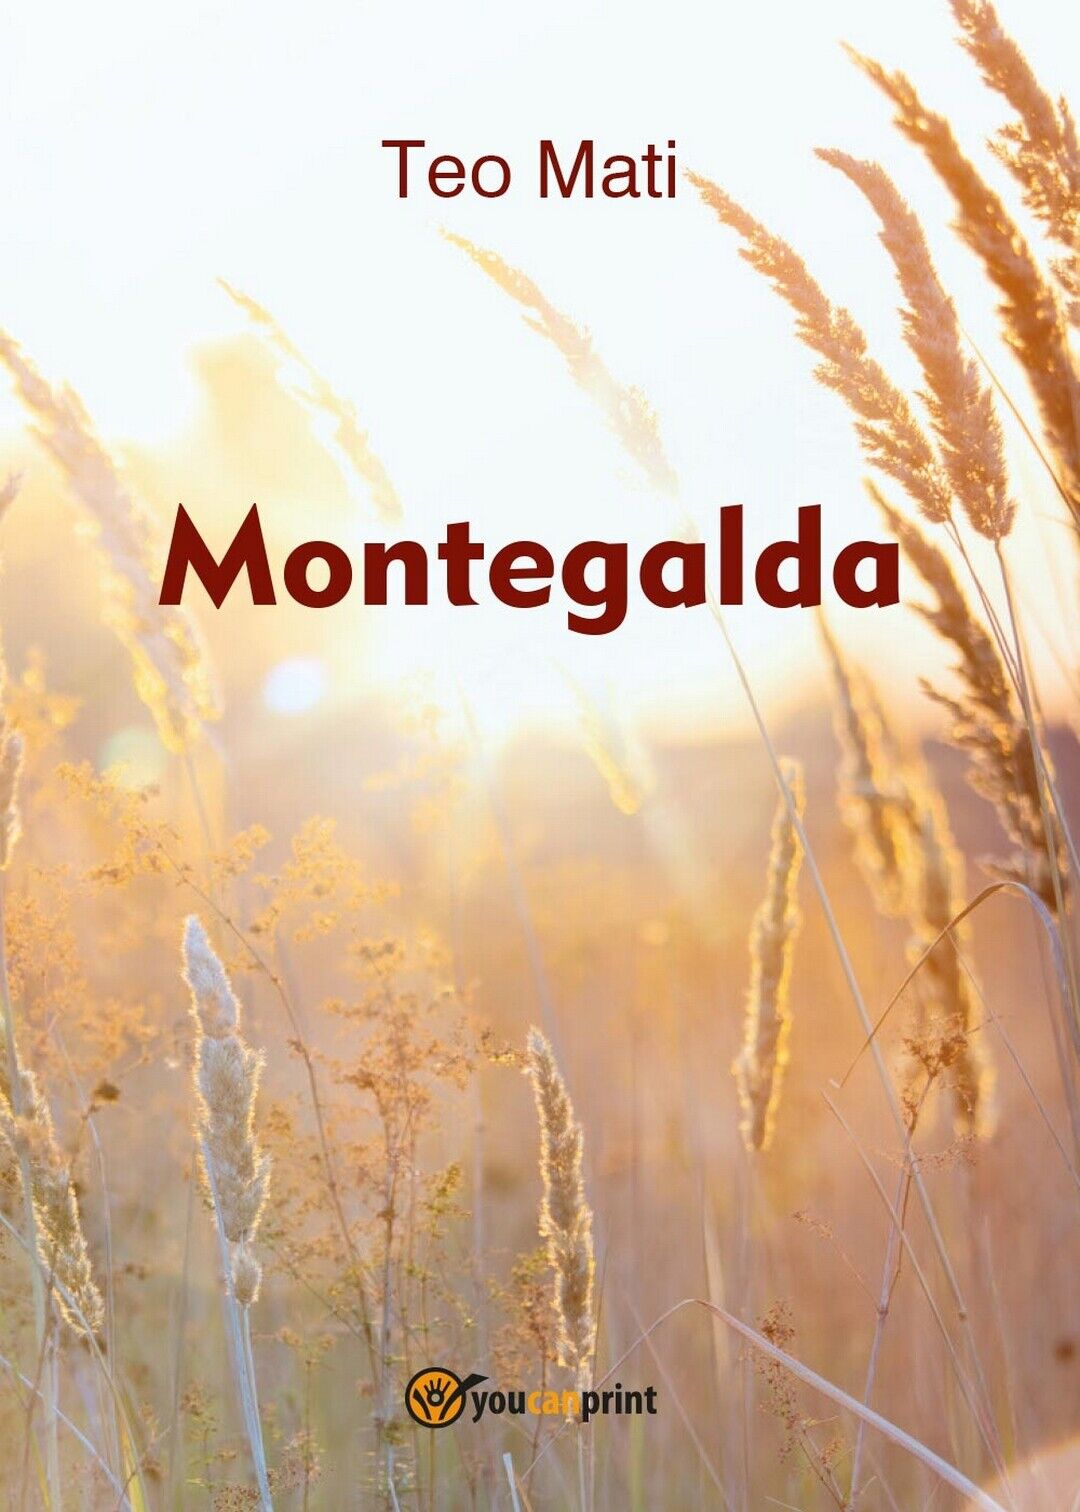 Montegalda  di Teo Mati,  2016,  Youcanprint